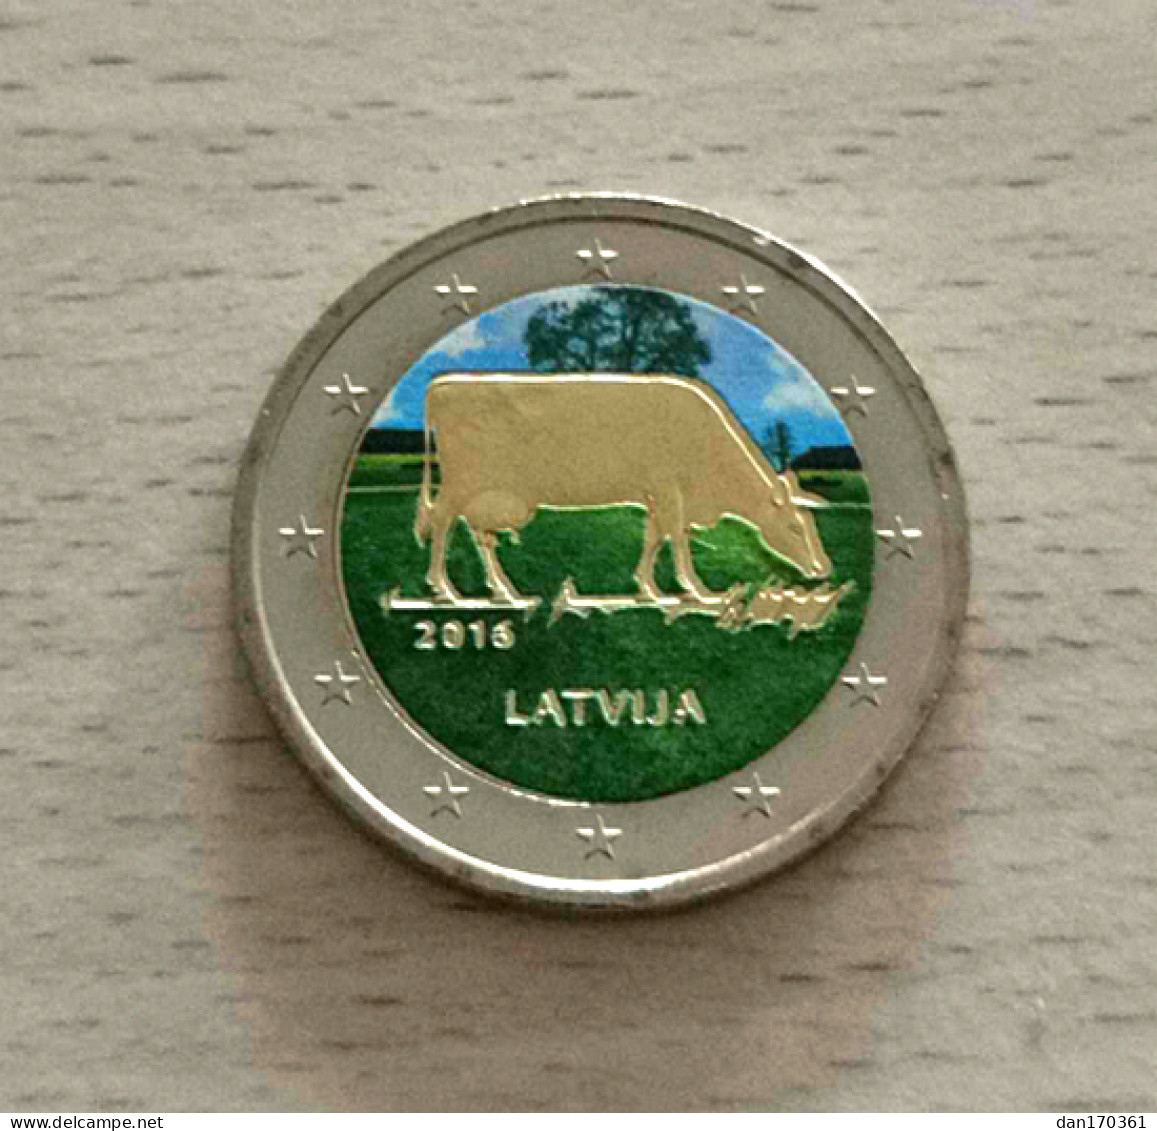 LETTONIE 2016 - INDUSTRIE LAITIERE VACHE BRUNE -  2 EURO COMMEMORATIVE - COULEUR - FARBE - COLORED - COLOR - COLORISEE - Latvia